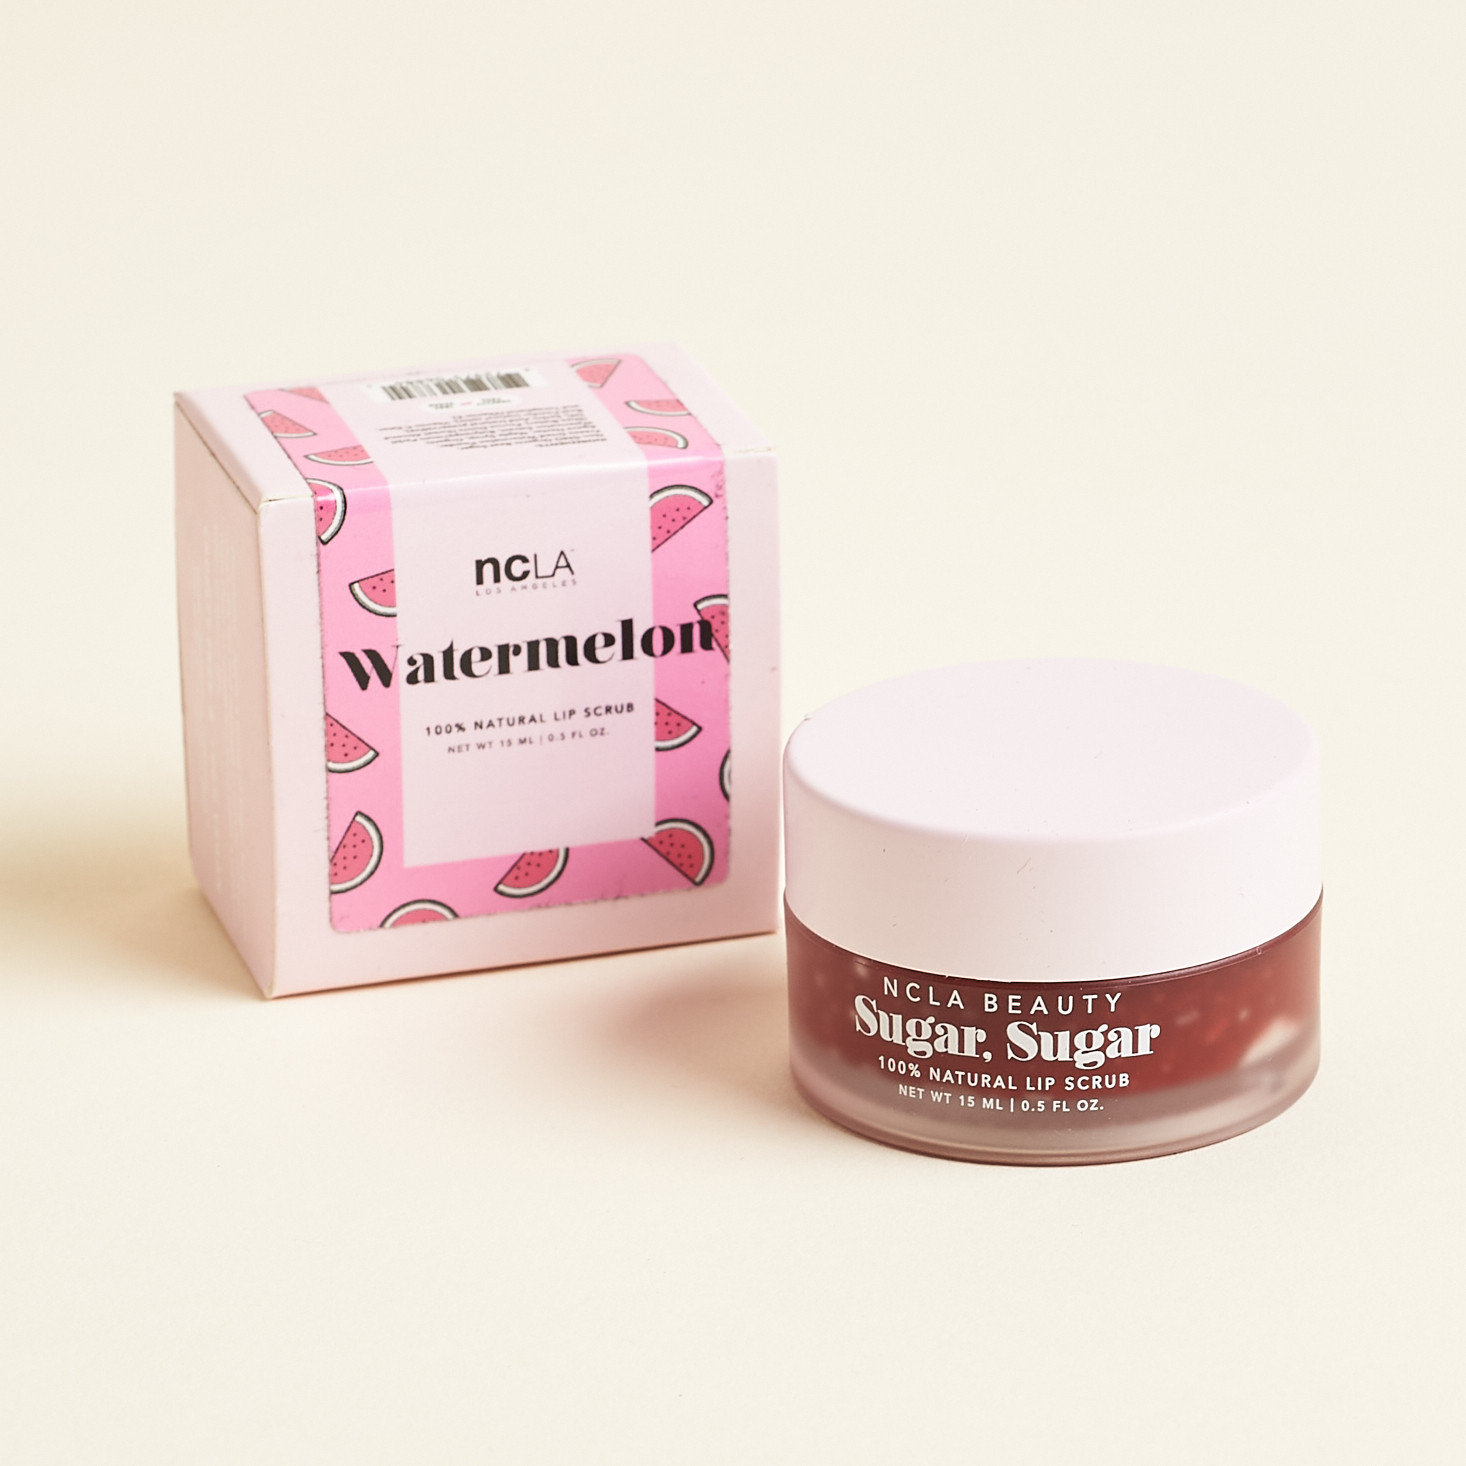 NCLA Beauty Sugar. Sugar Watermelon Lip Scrub with box